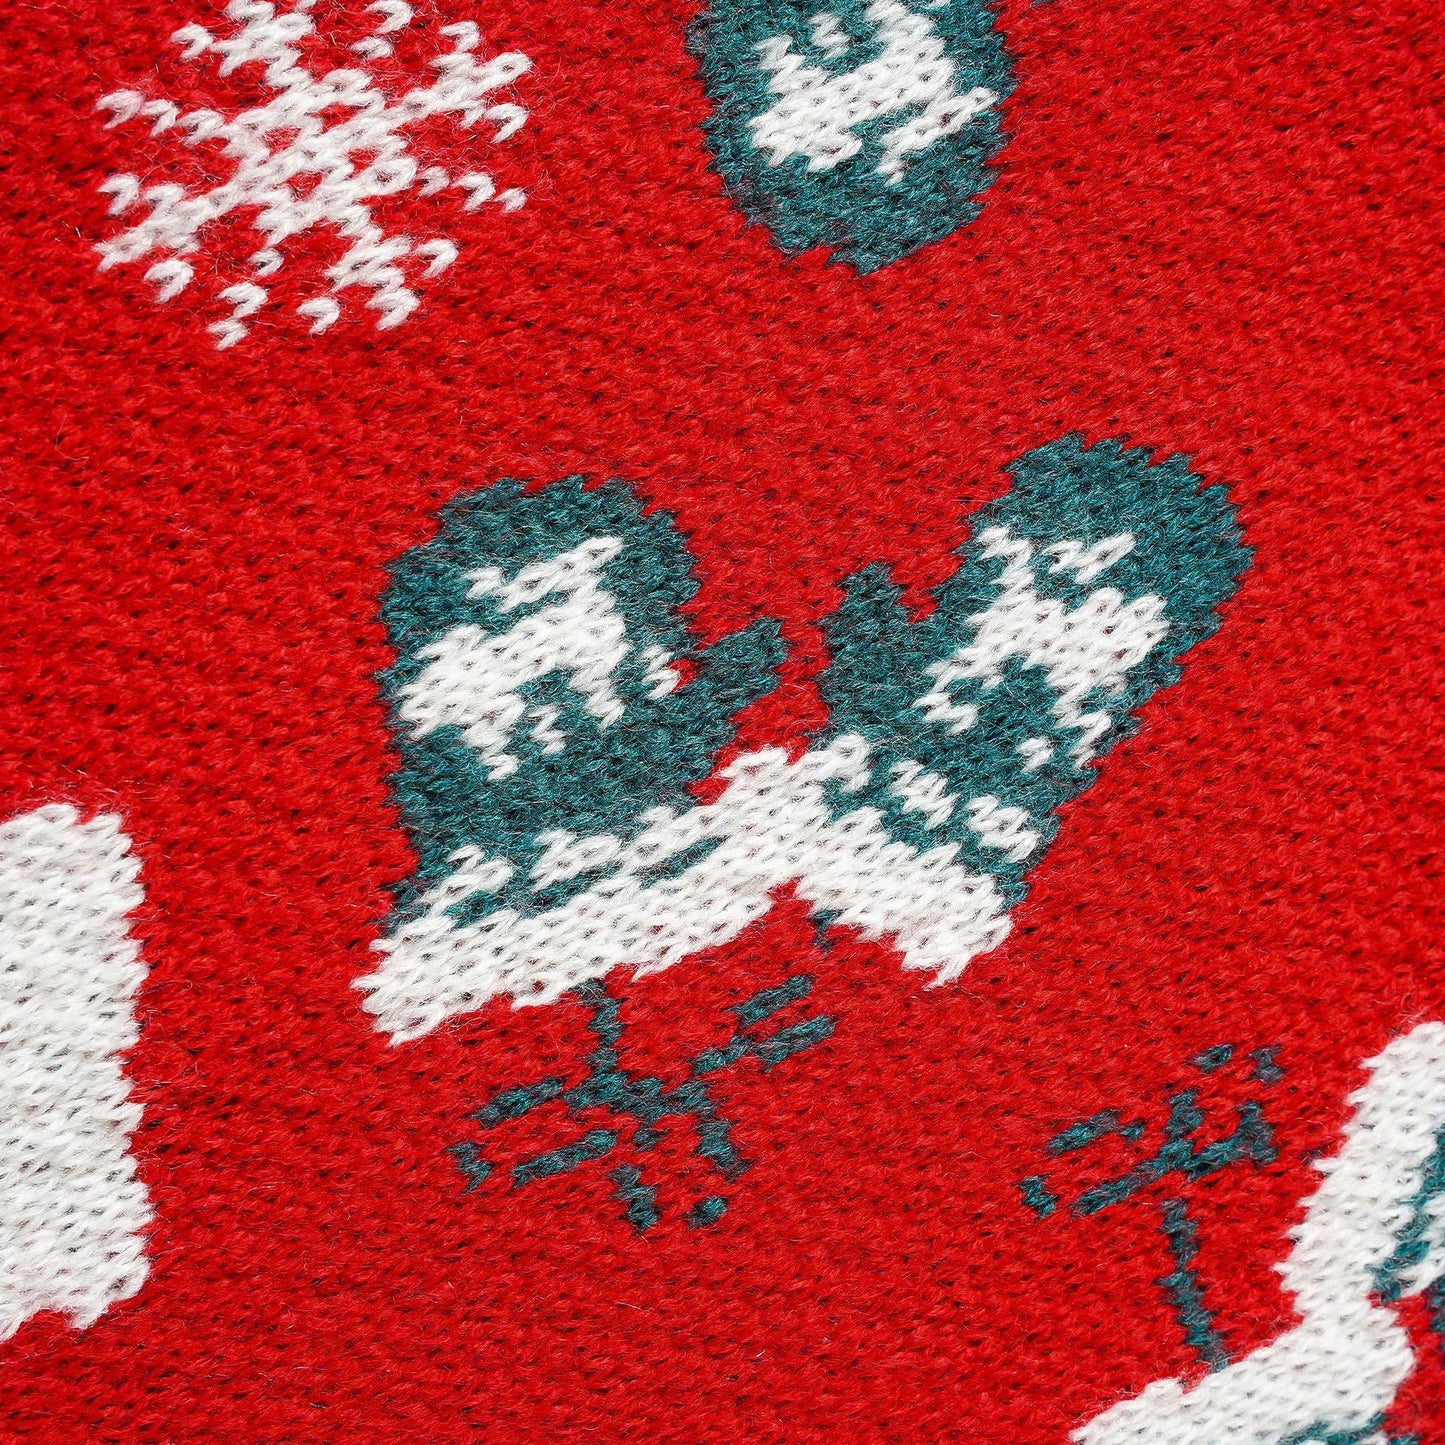 Christmas gift red scarf female fashion cute autumn and winter warm Korean fan ins student cute warm scarf